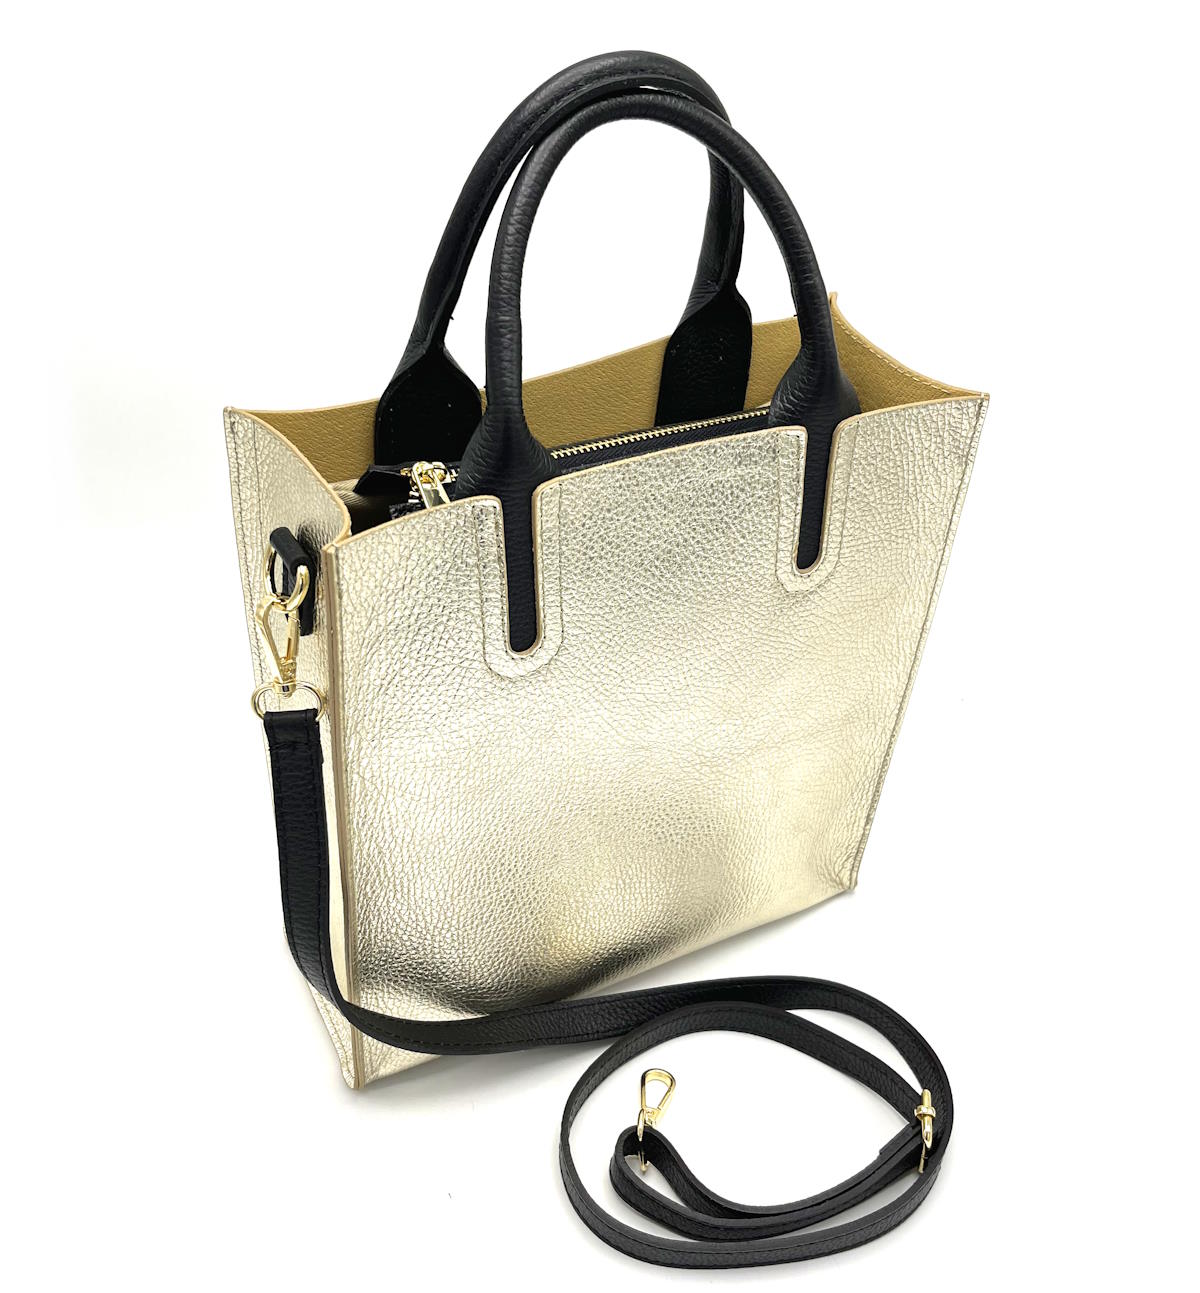 Genuine leather shoulder bag, Made in Italy, art. 112445/LA